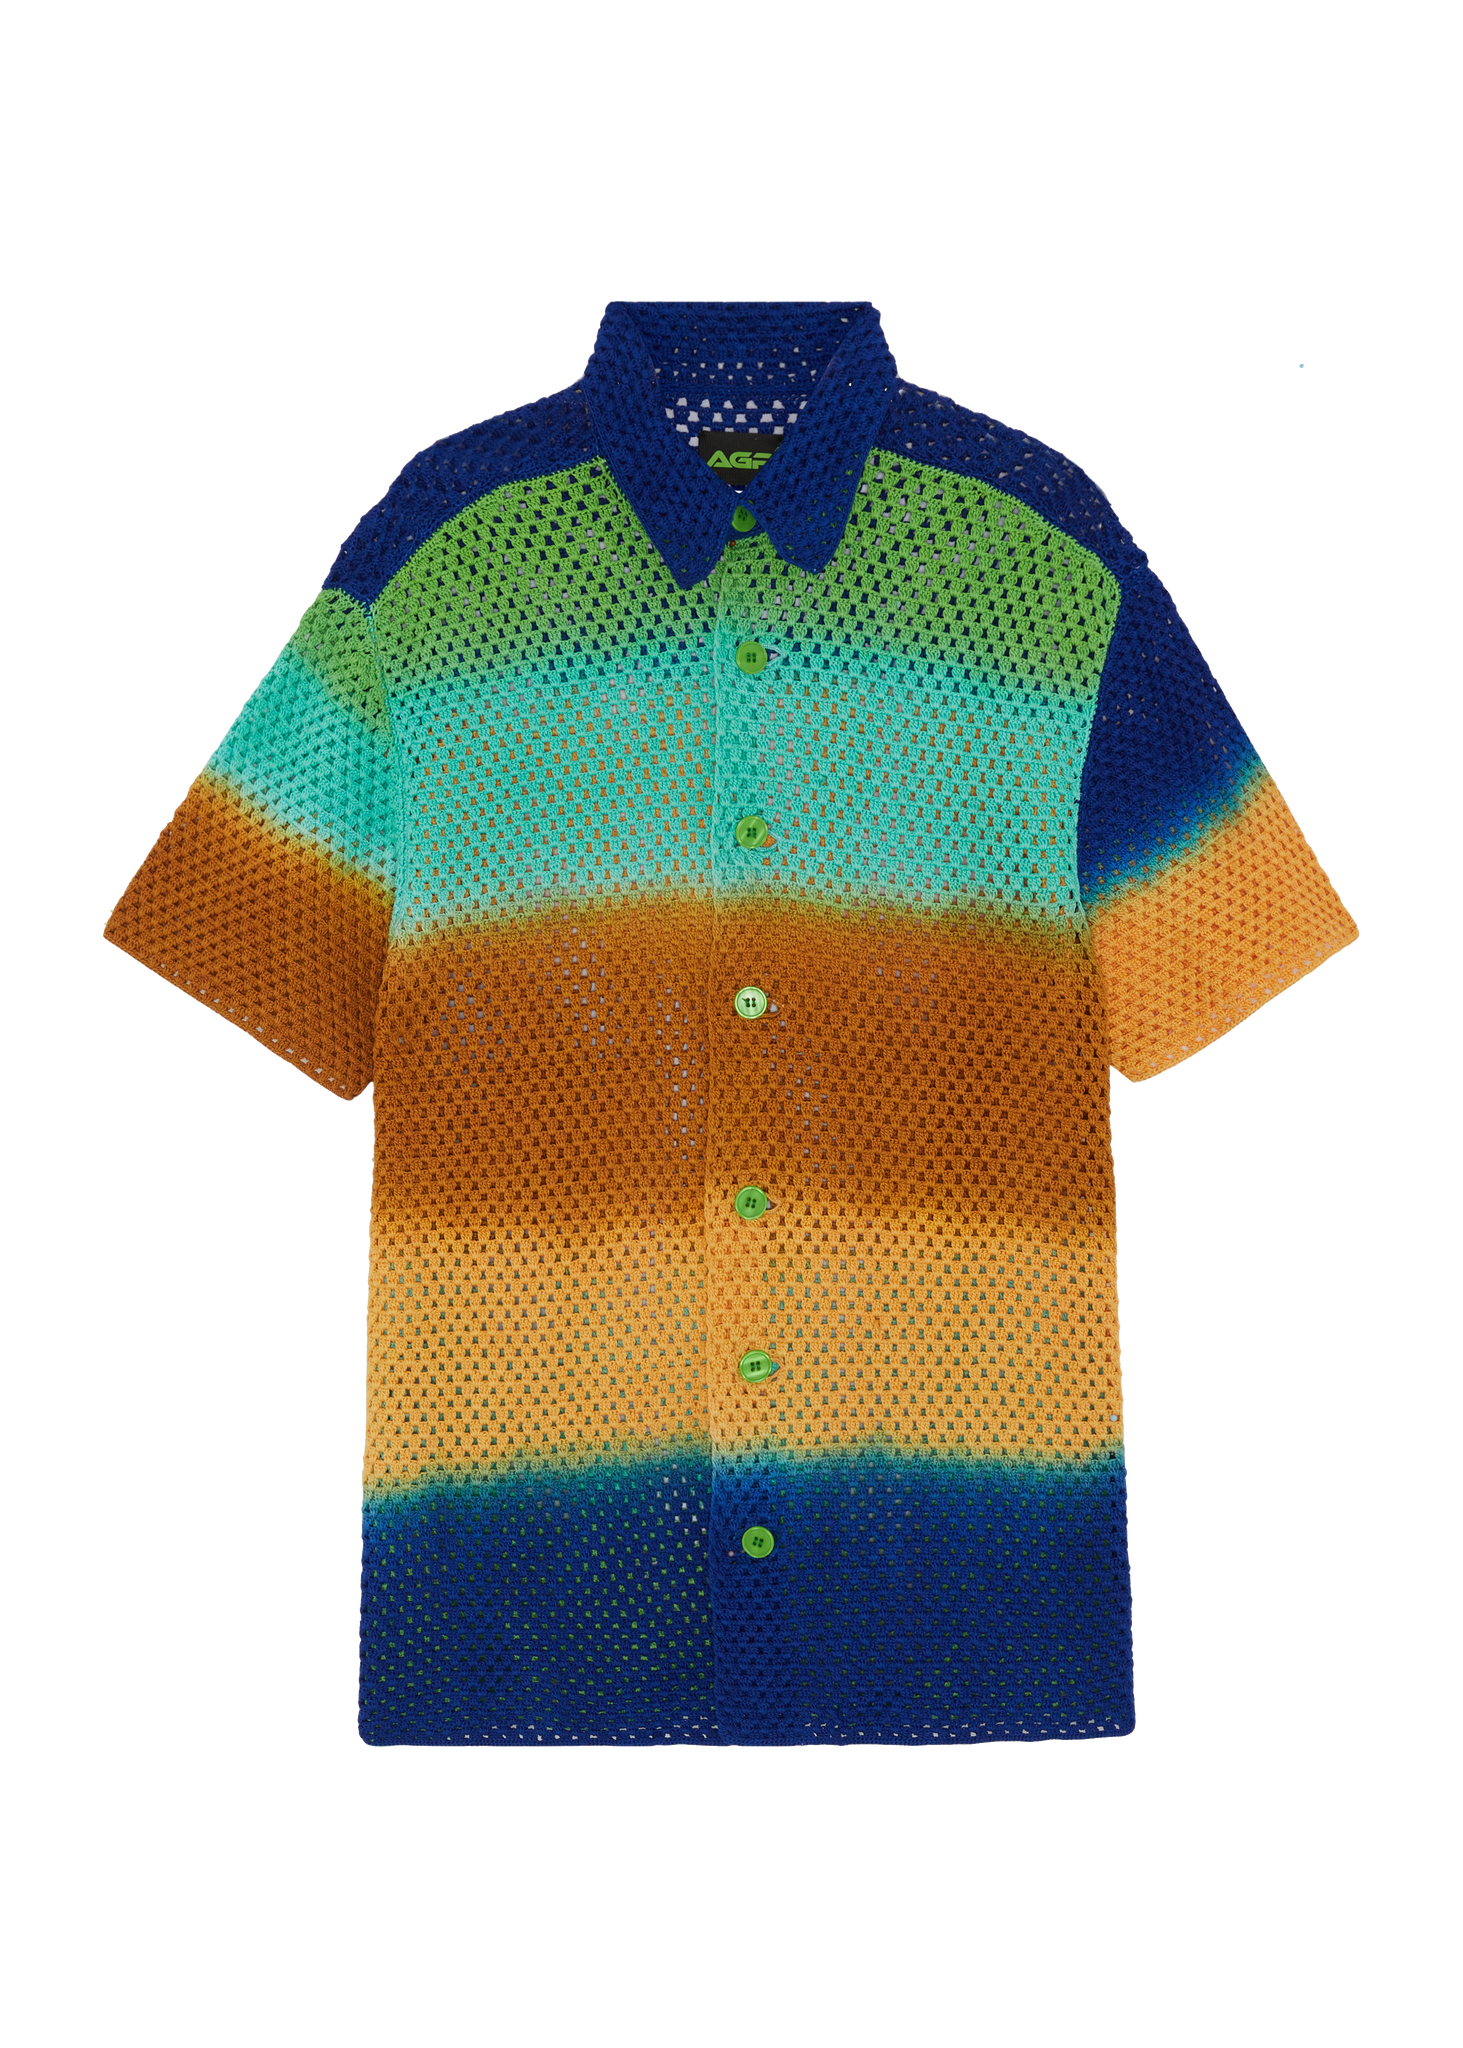 agr - wellness crochet shirt - packshot - front